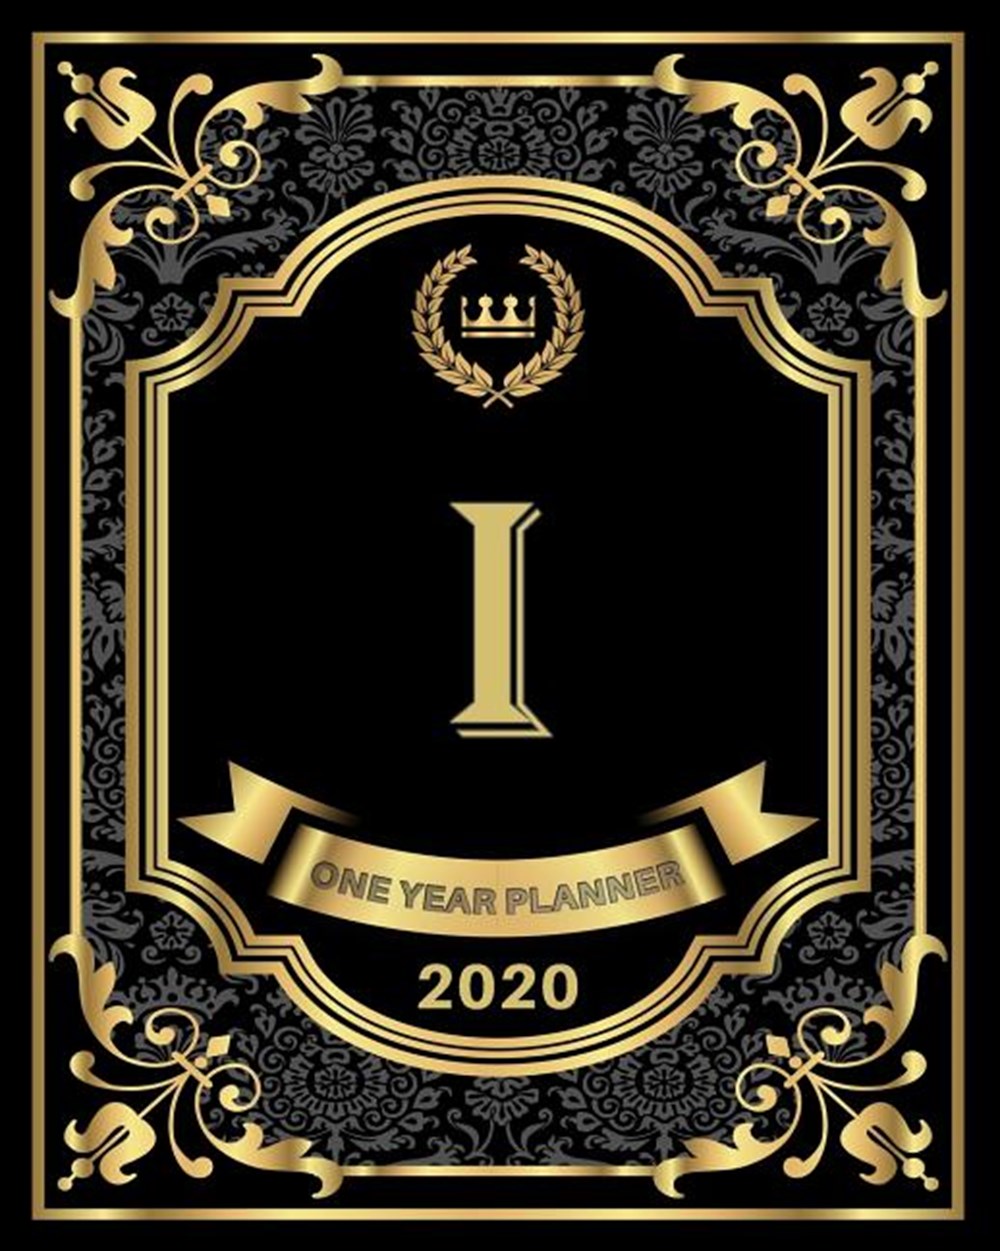 I - 2020 One Year Planner Elegant Black and Gold Monogram Initials - Pretty Calendar Organizer - One